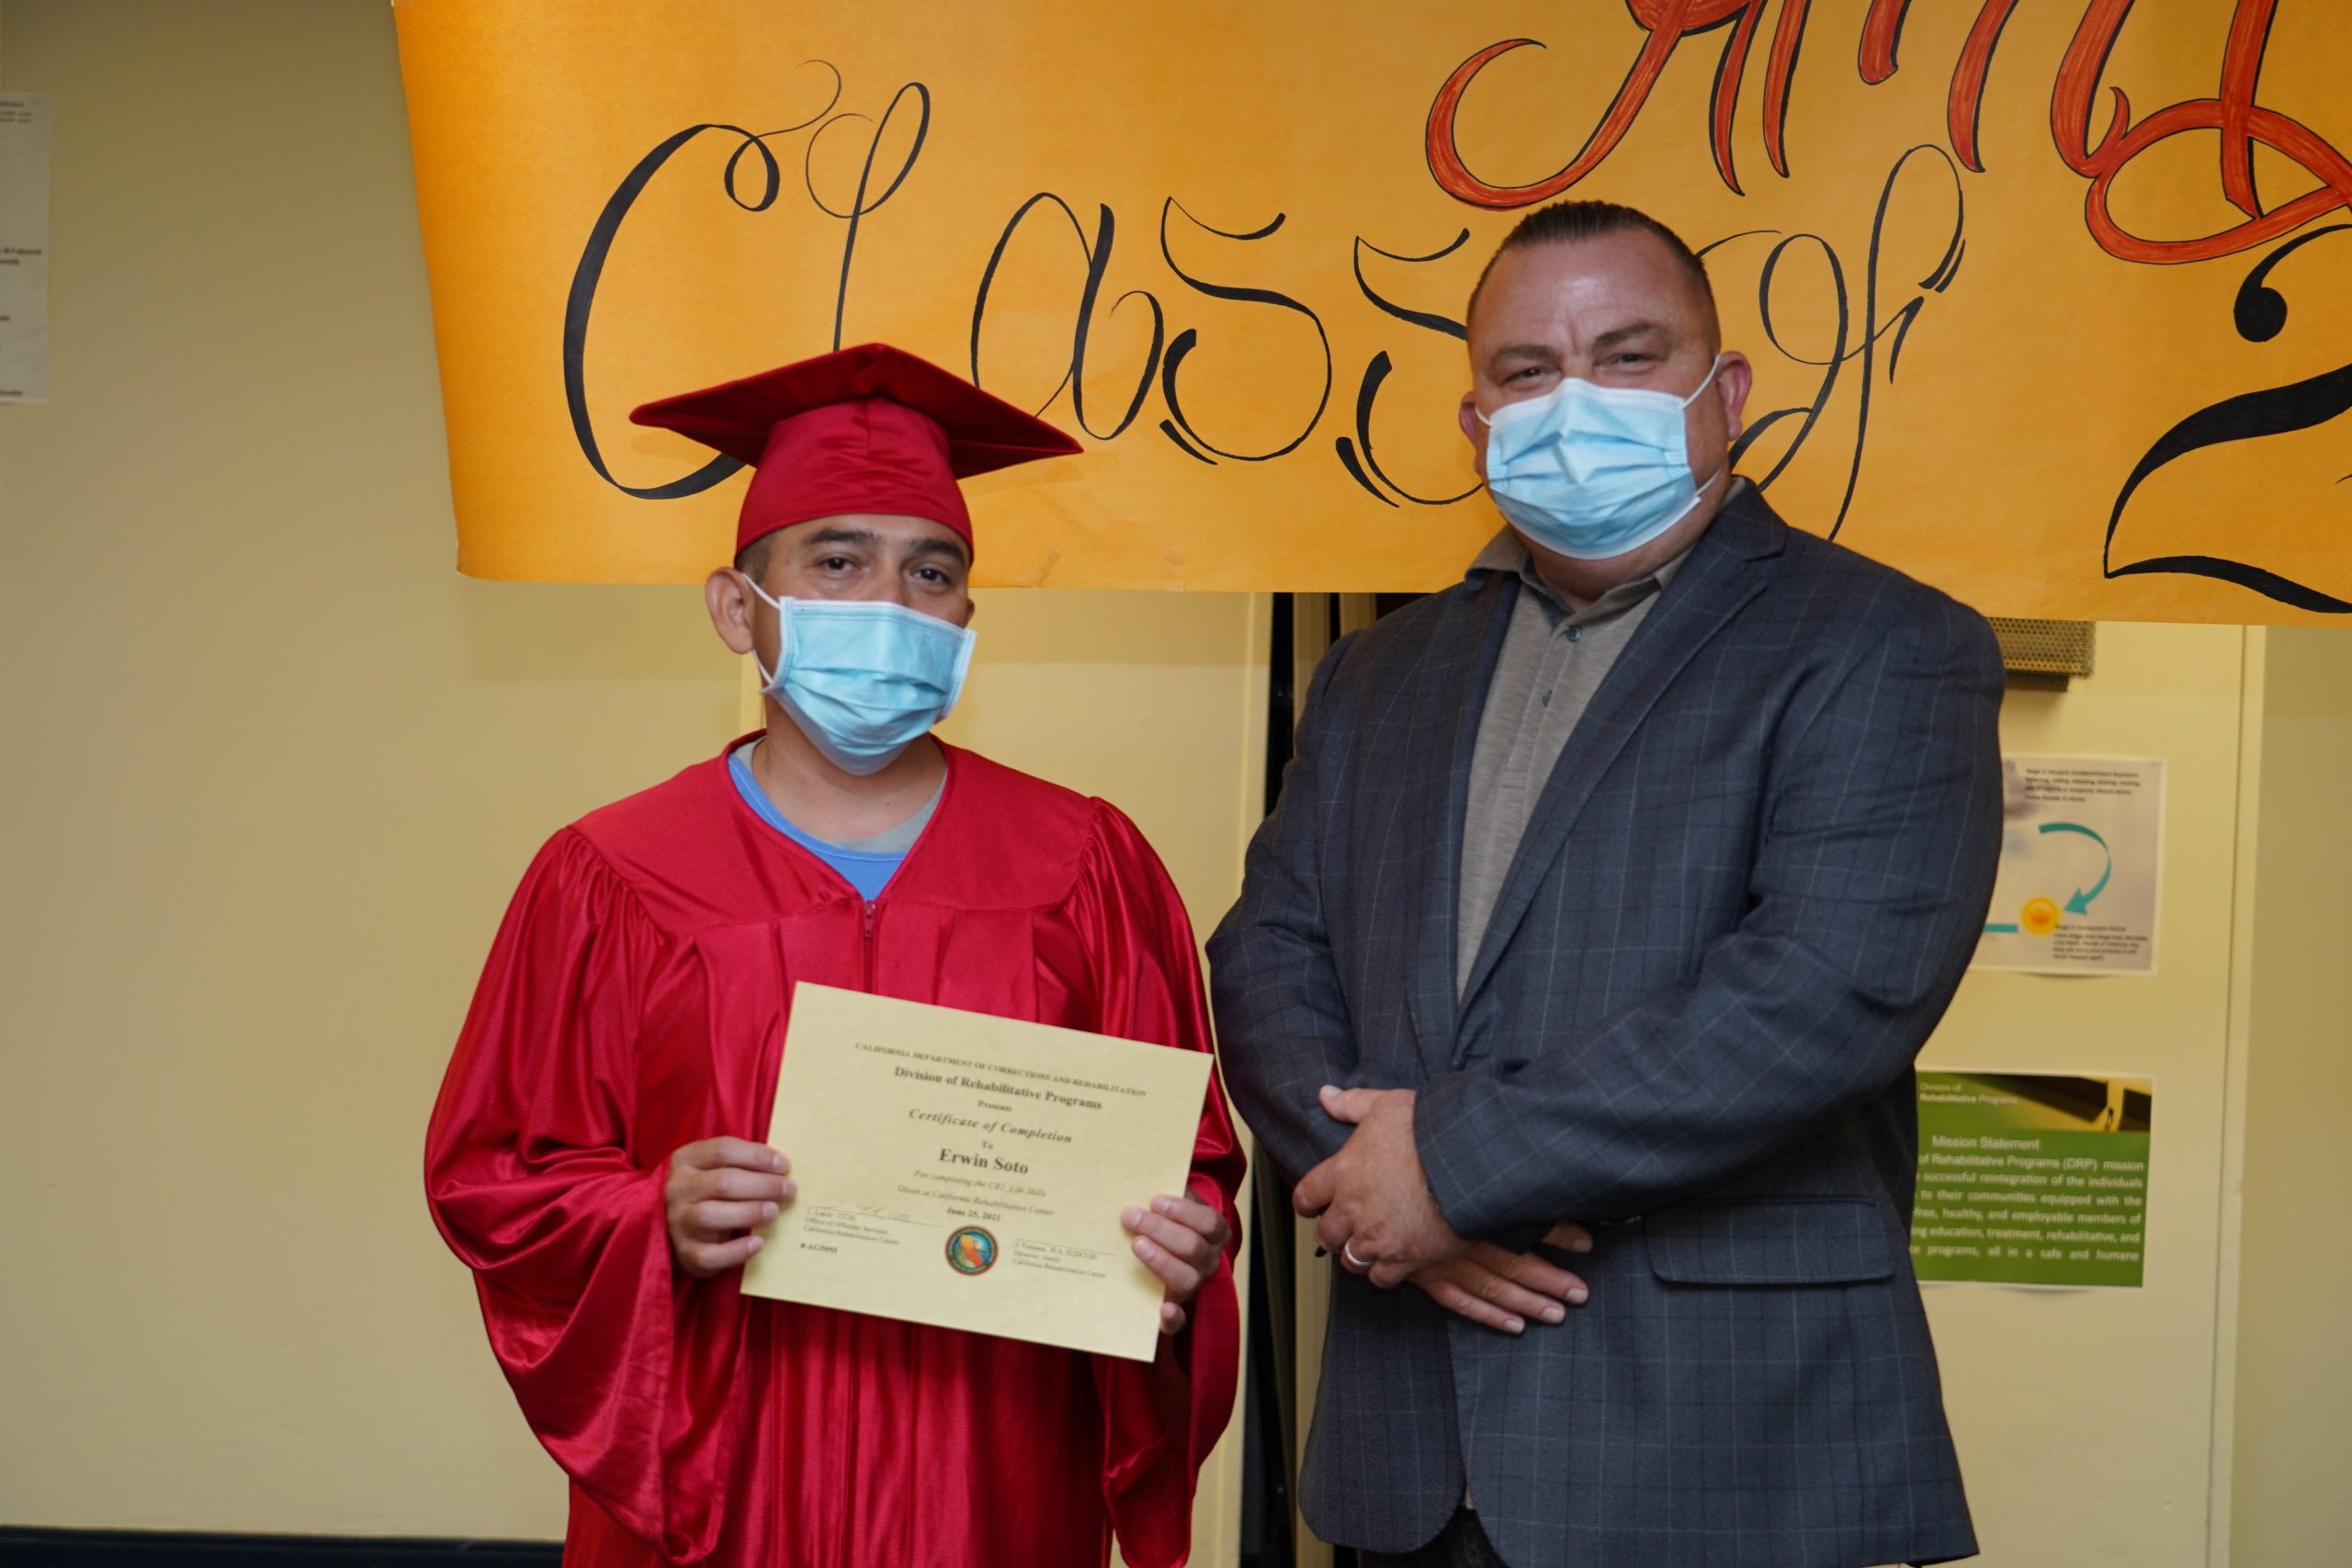 graduate and prison warden hold certificate.